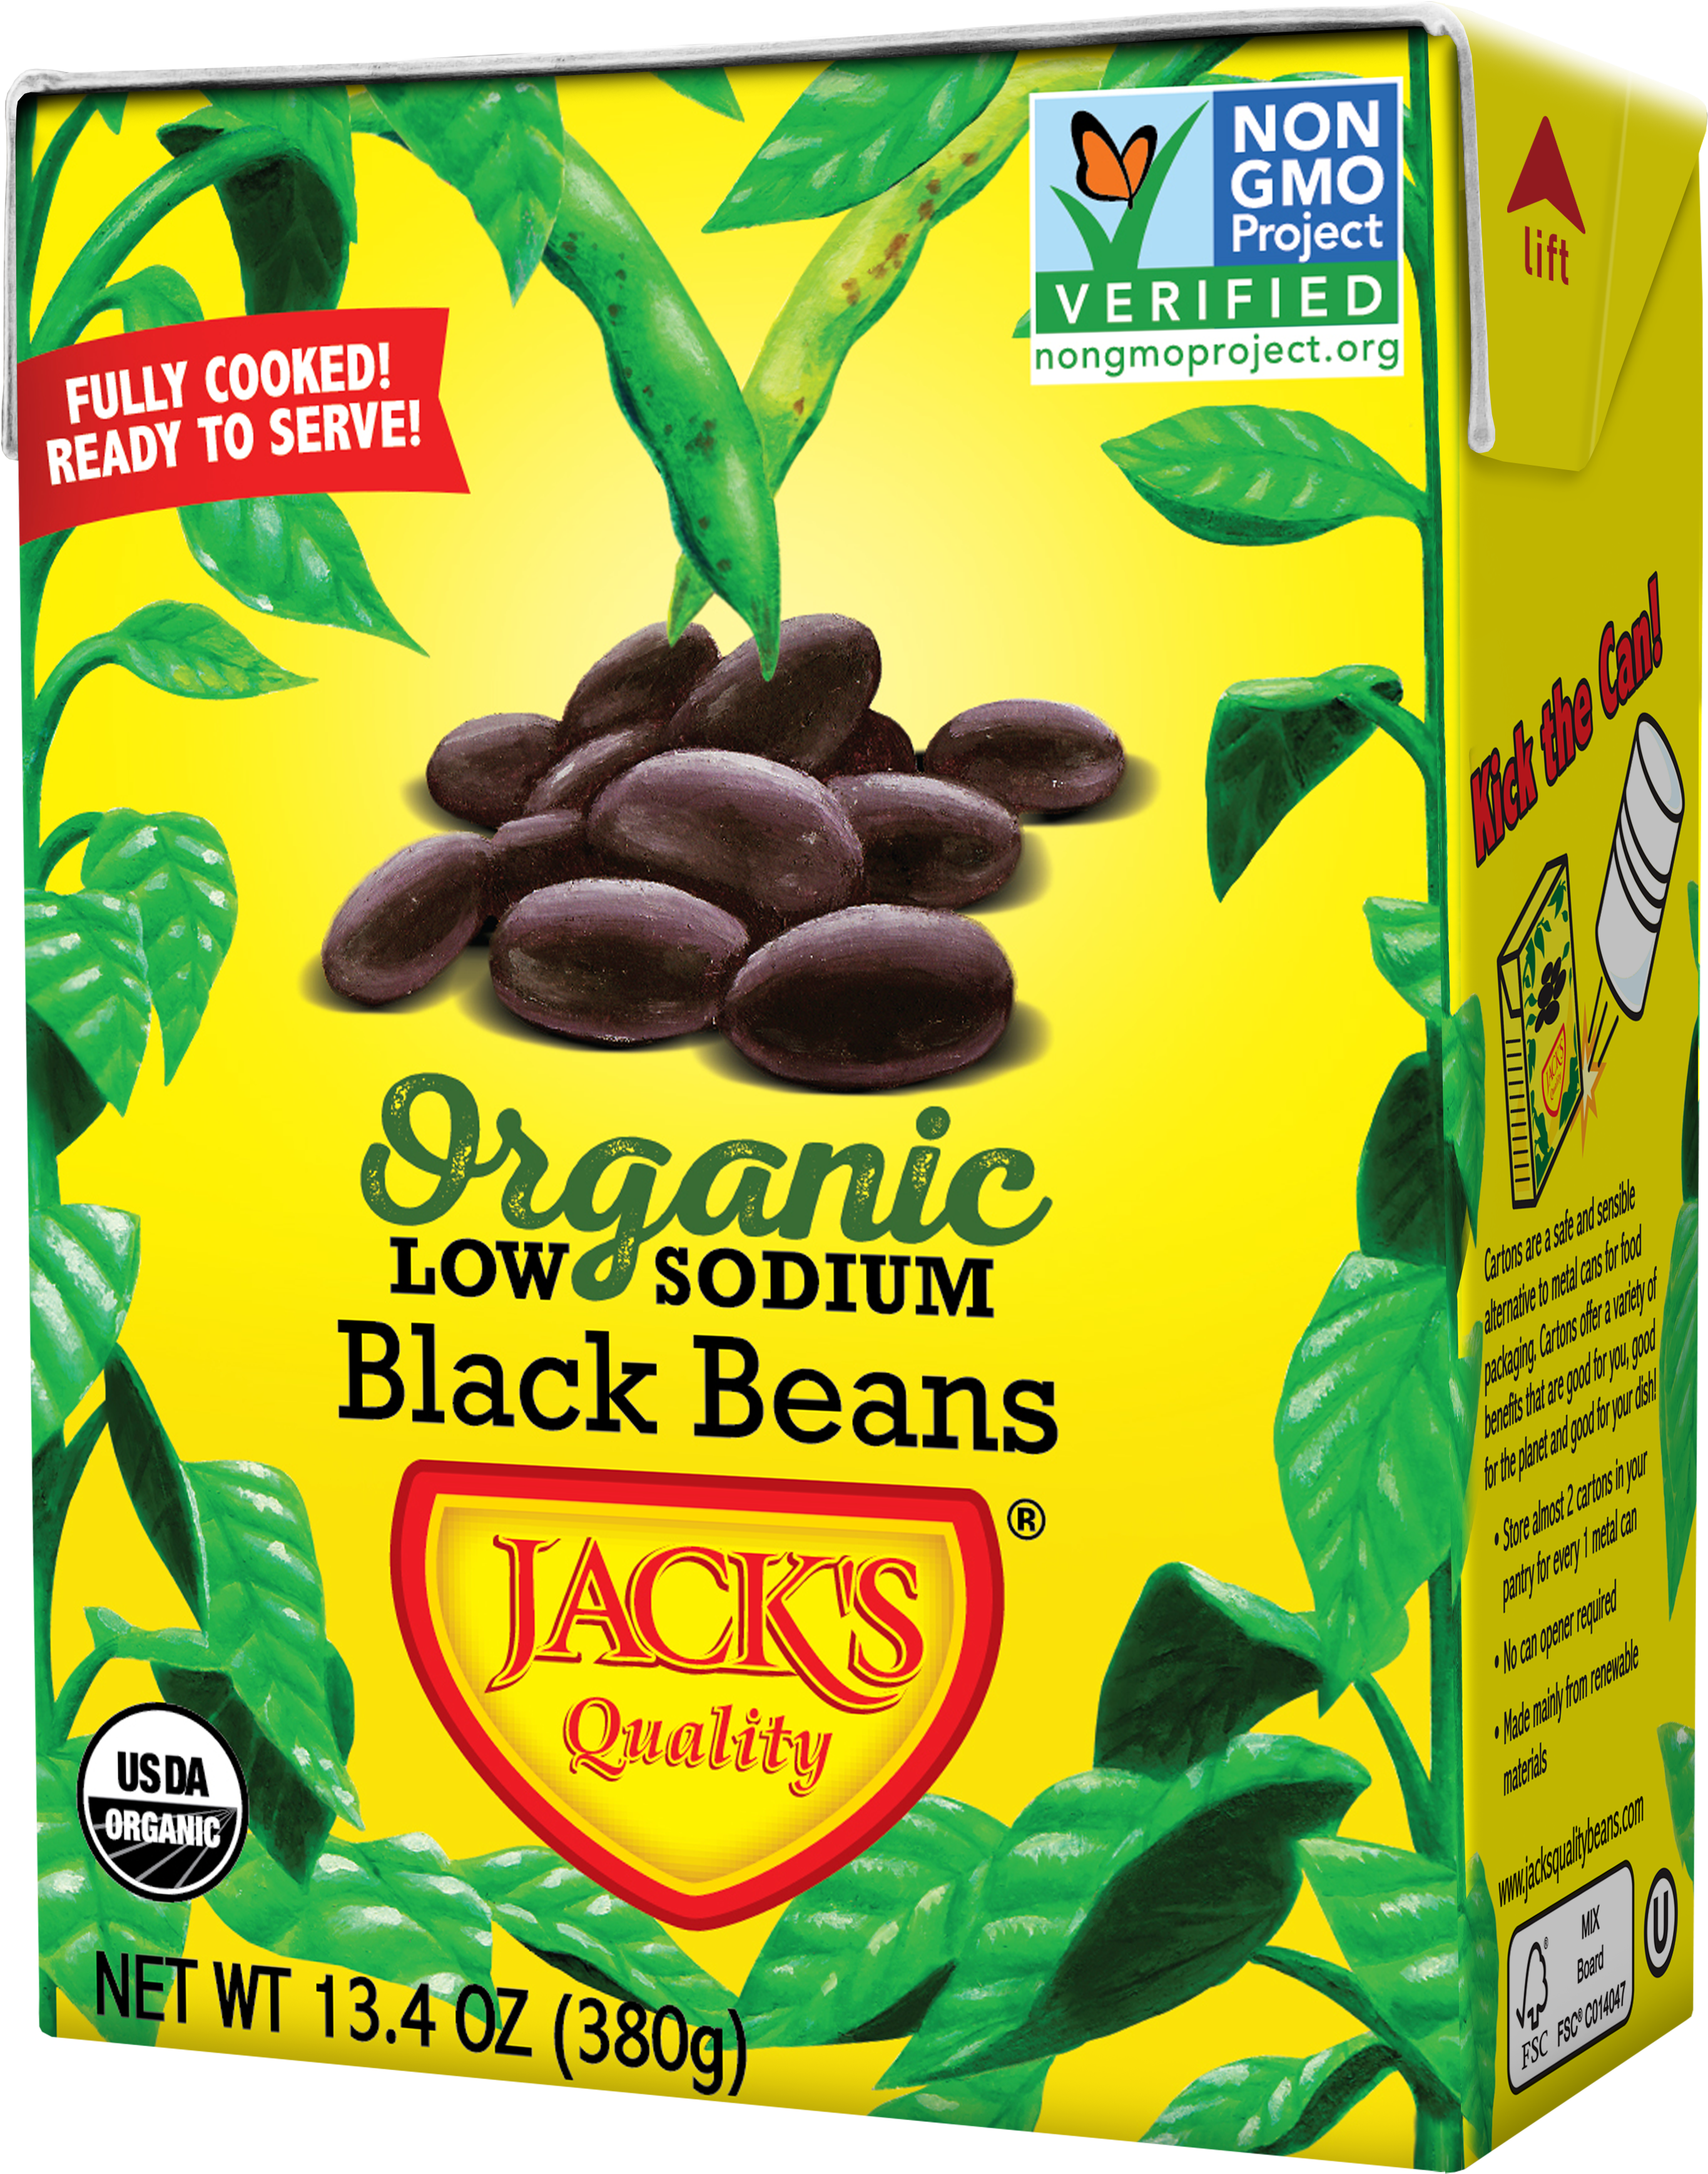 Organic Low Sodium Black Beans Packaging Jacks Quality